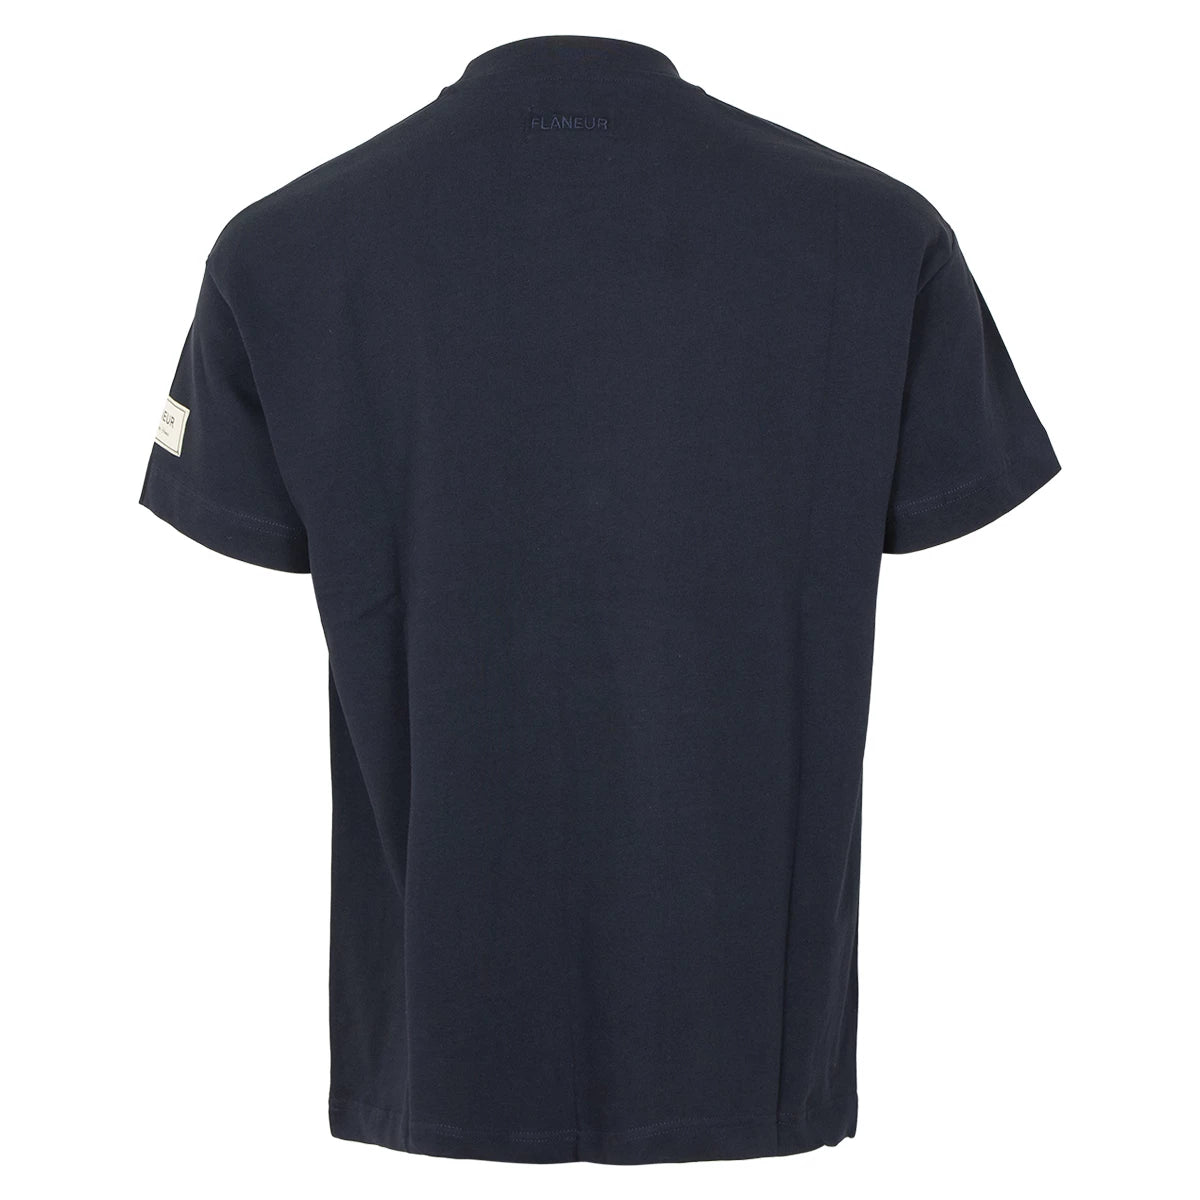 Flaneur T-shirt donkerblauw | Atelier shirt